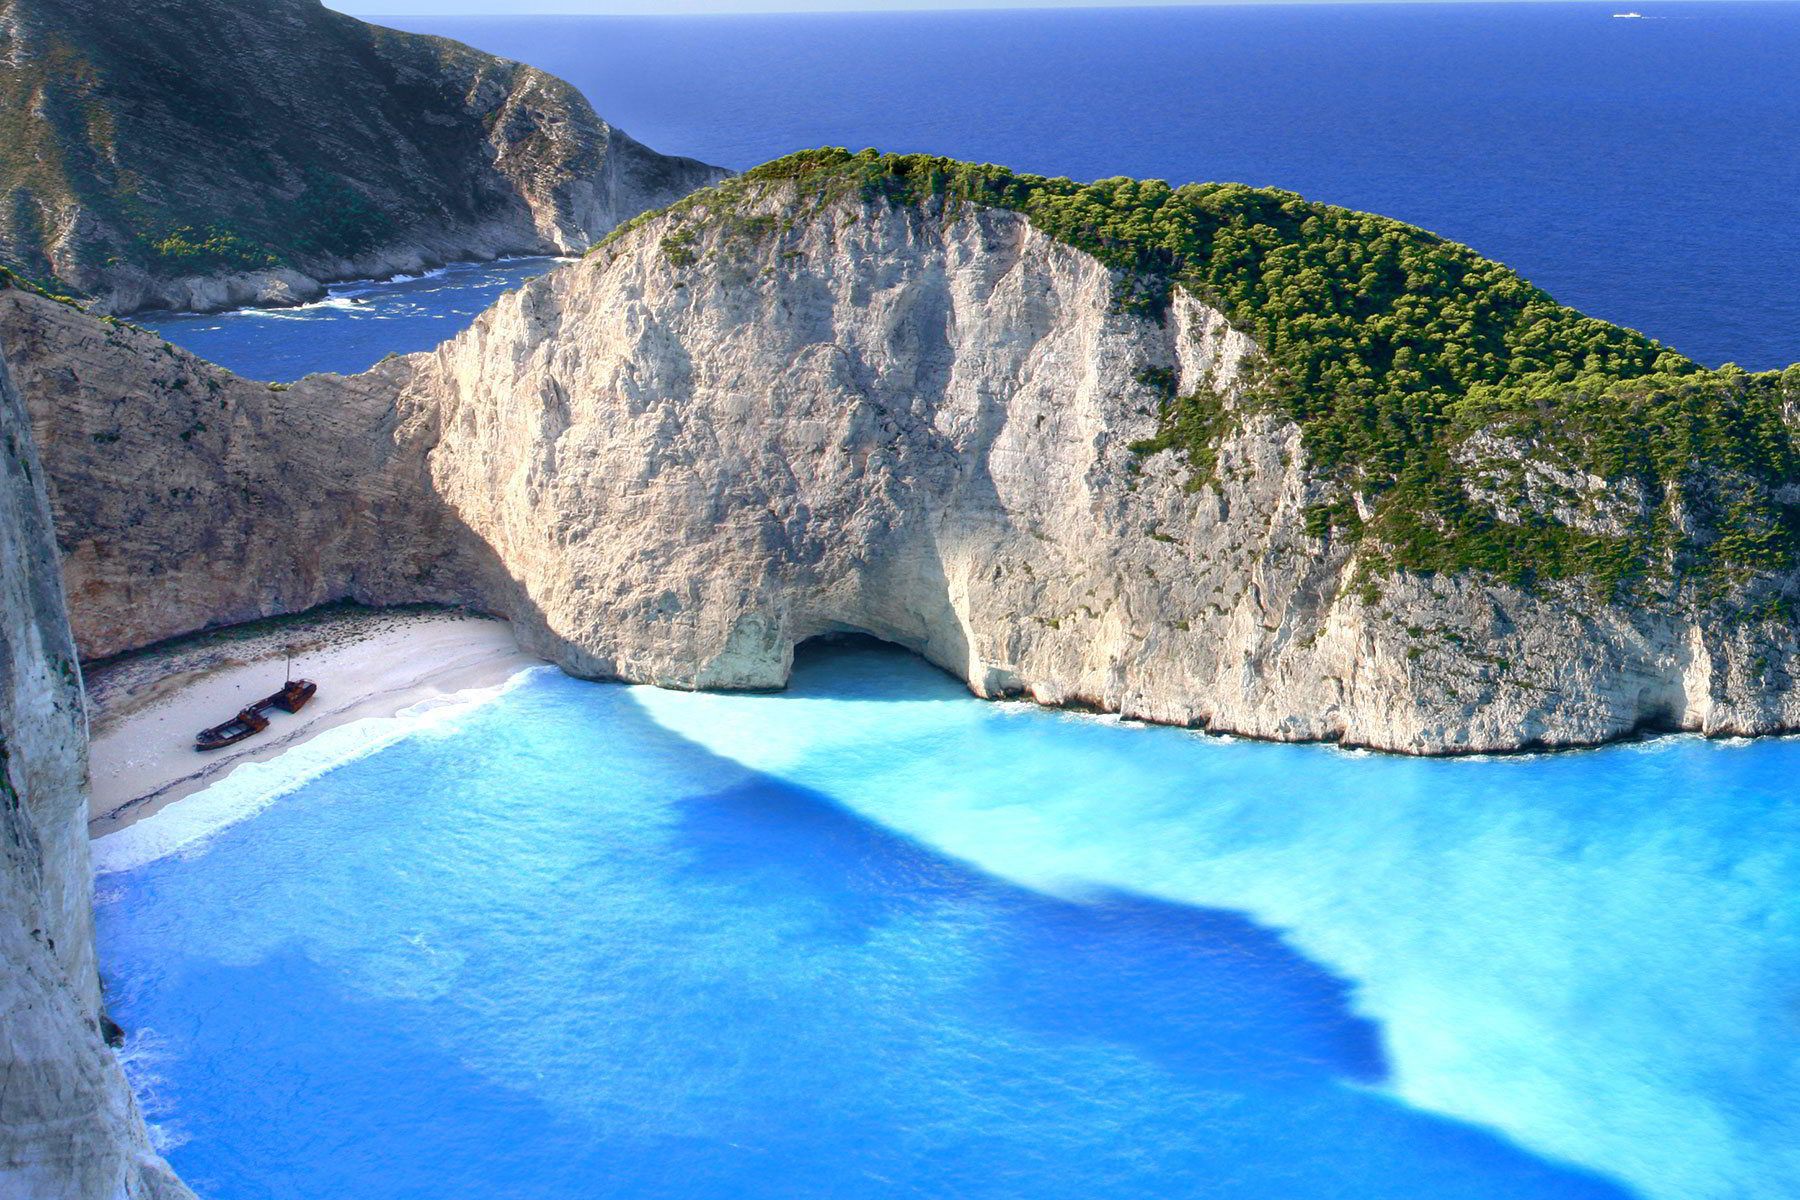 Tourism Min. – The tourist development of Greece is a national effort